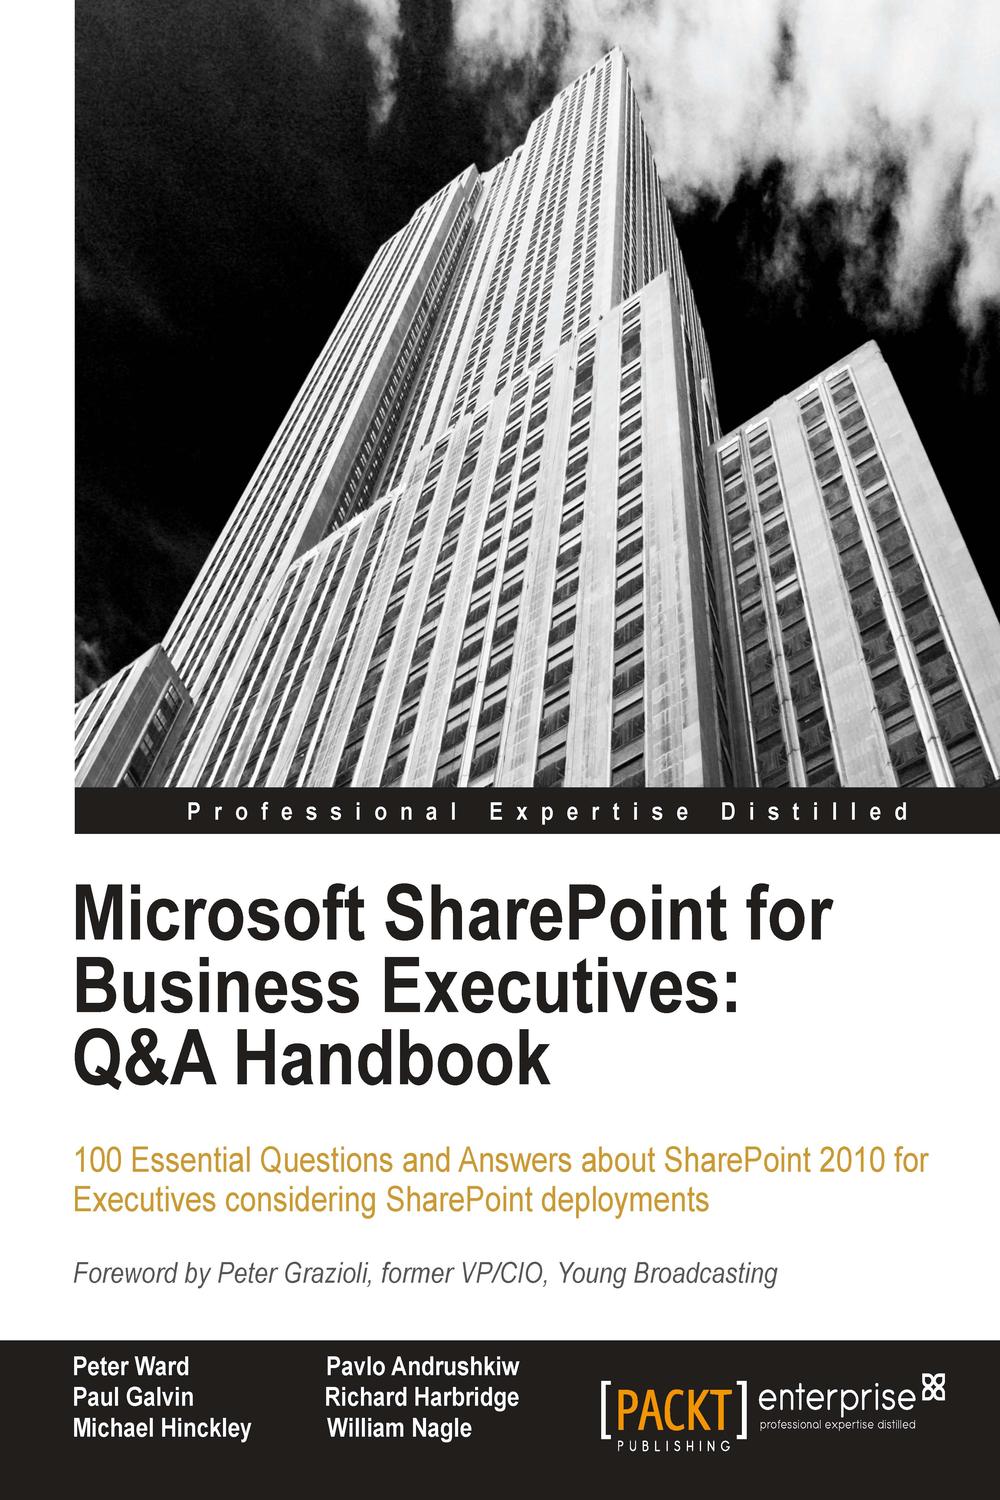 Microsoft SharePoint for Business Executives: Q&A Handbook - Peter Ward, Pavlo Andrushkiw, Richard Harbridge, Paul Galvin, Michael Hinckley, William Nagle